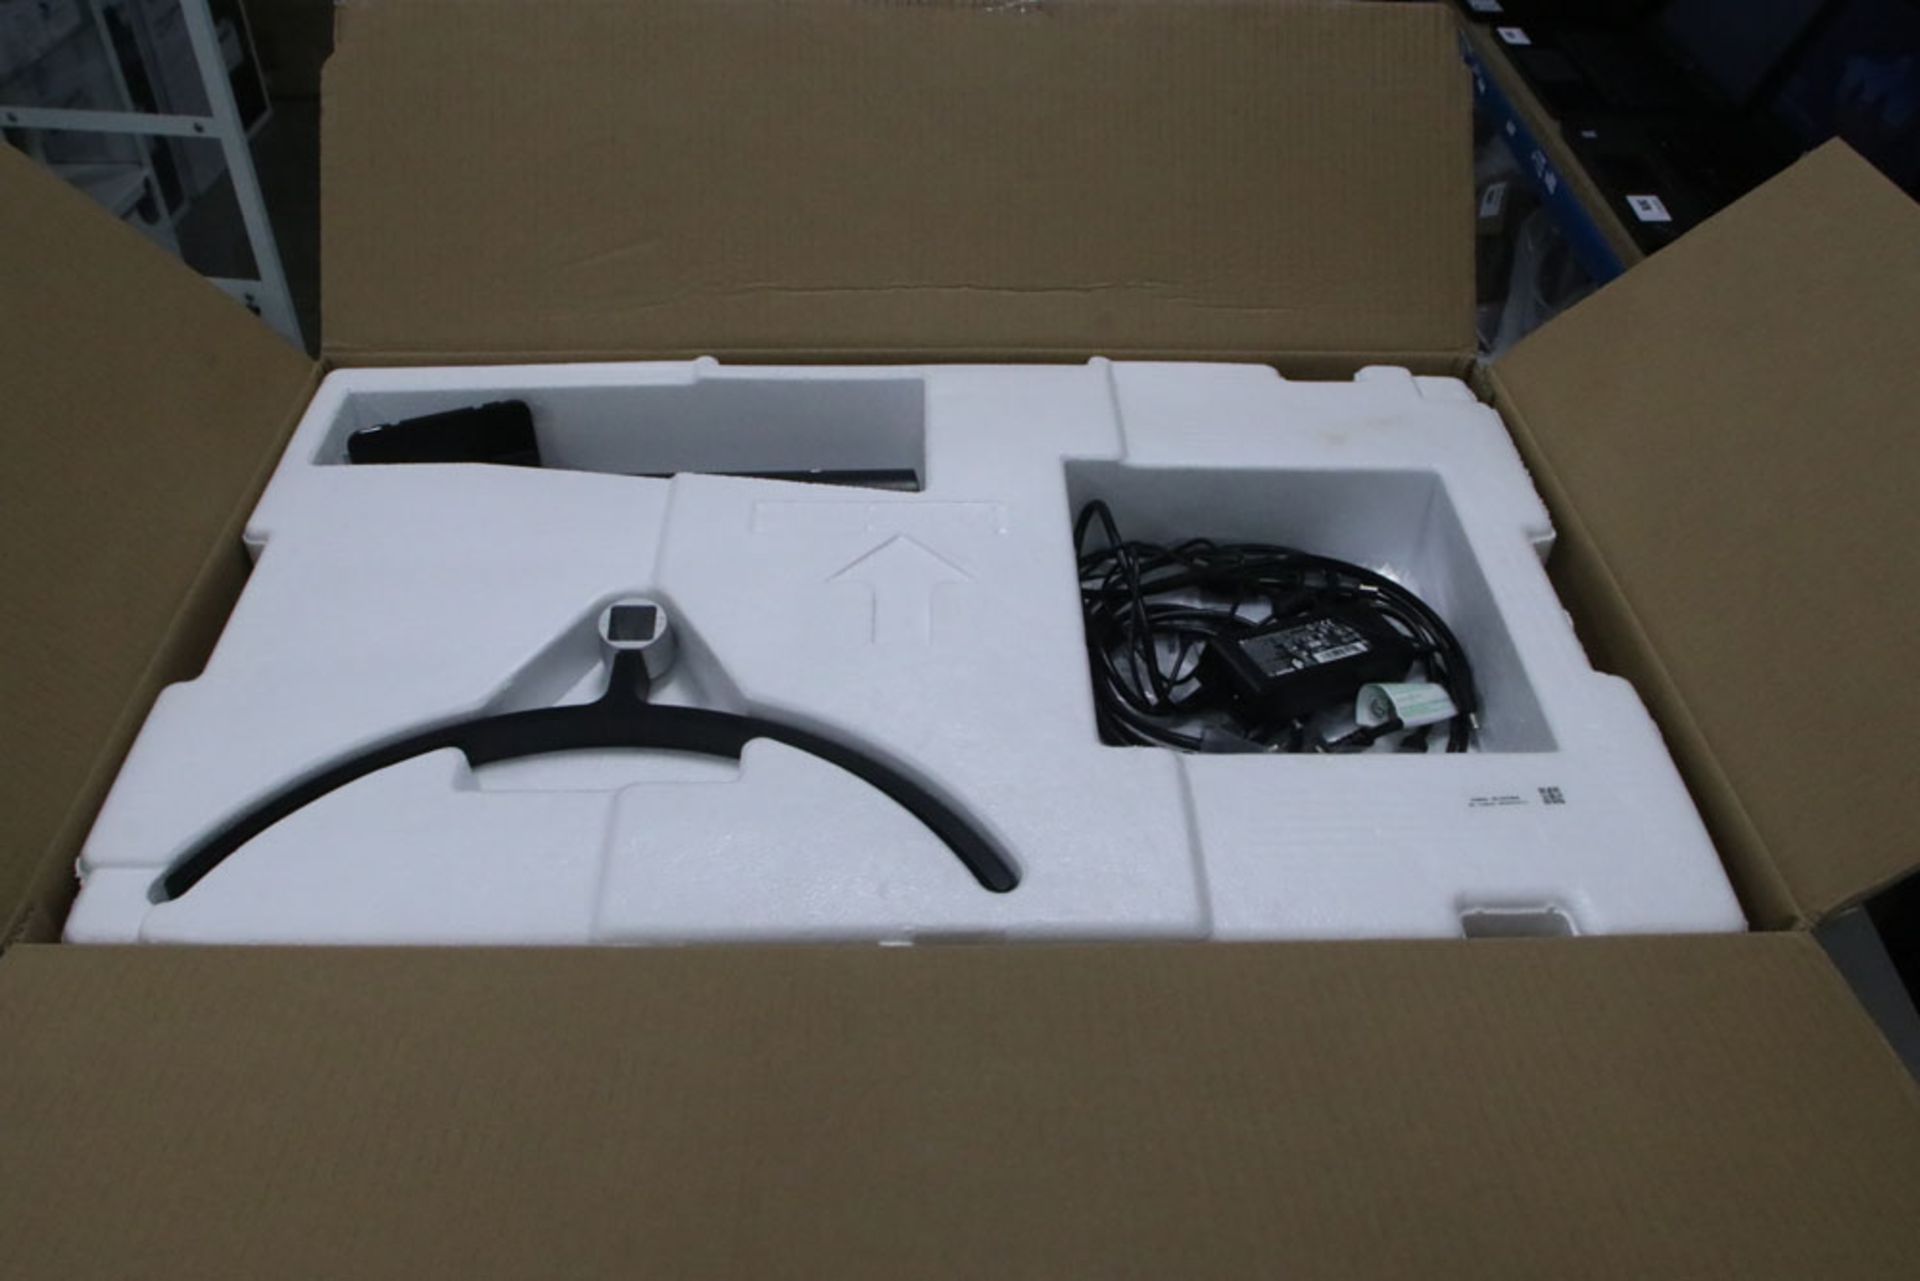 LG QHD monitor in box - Image 2 of 3